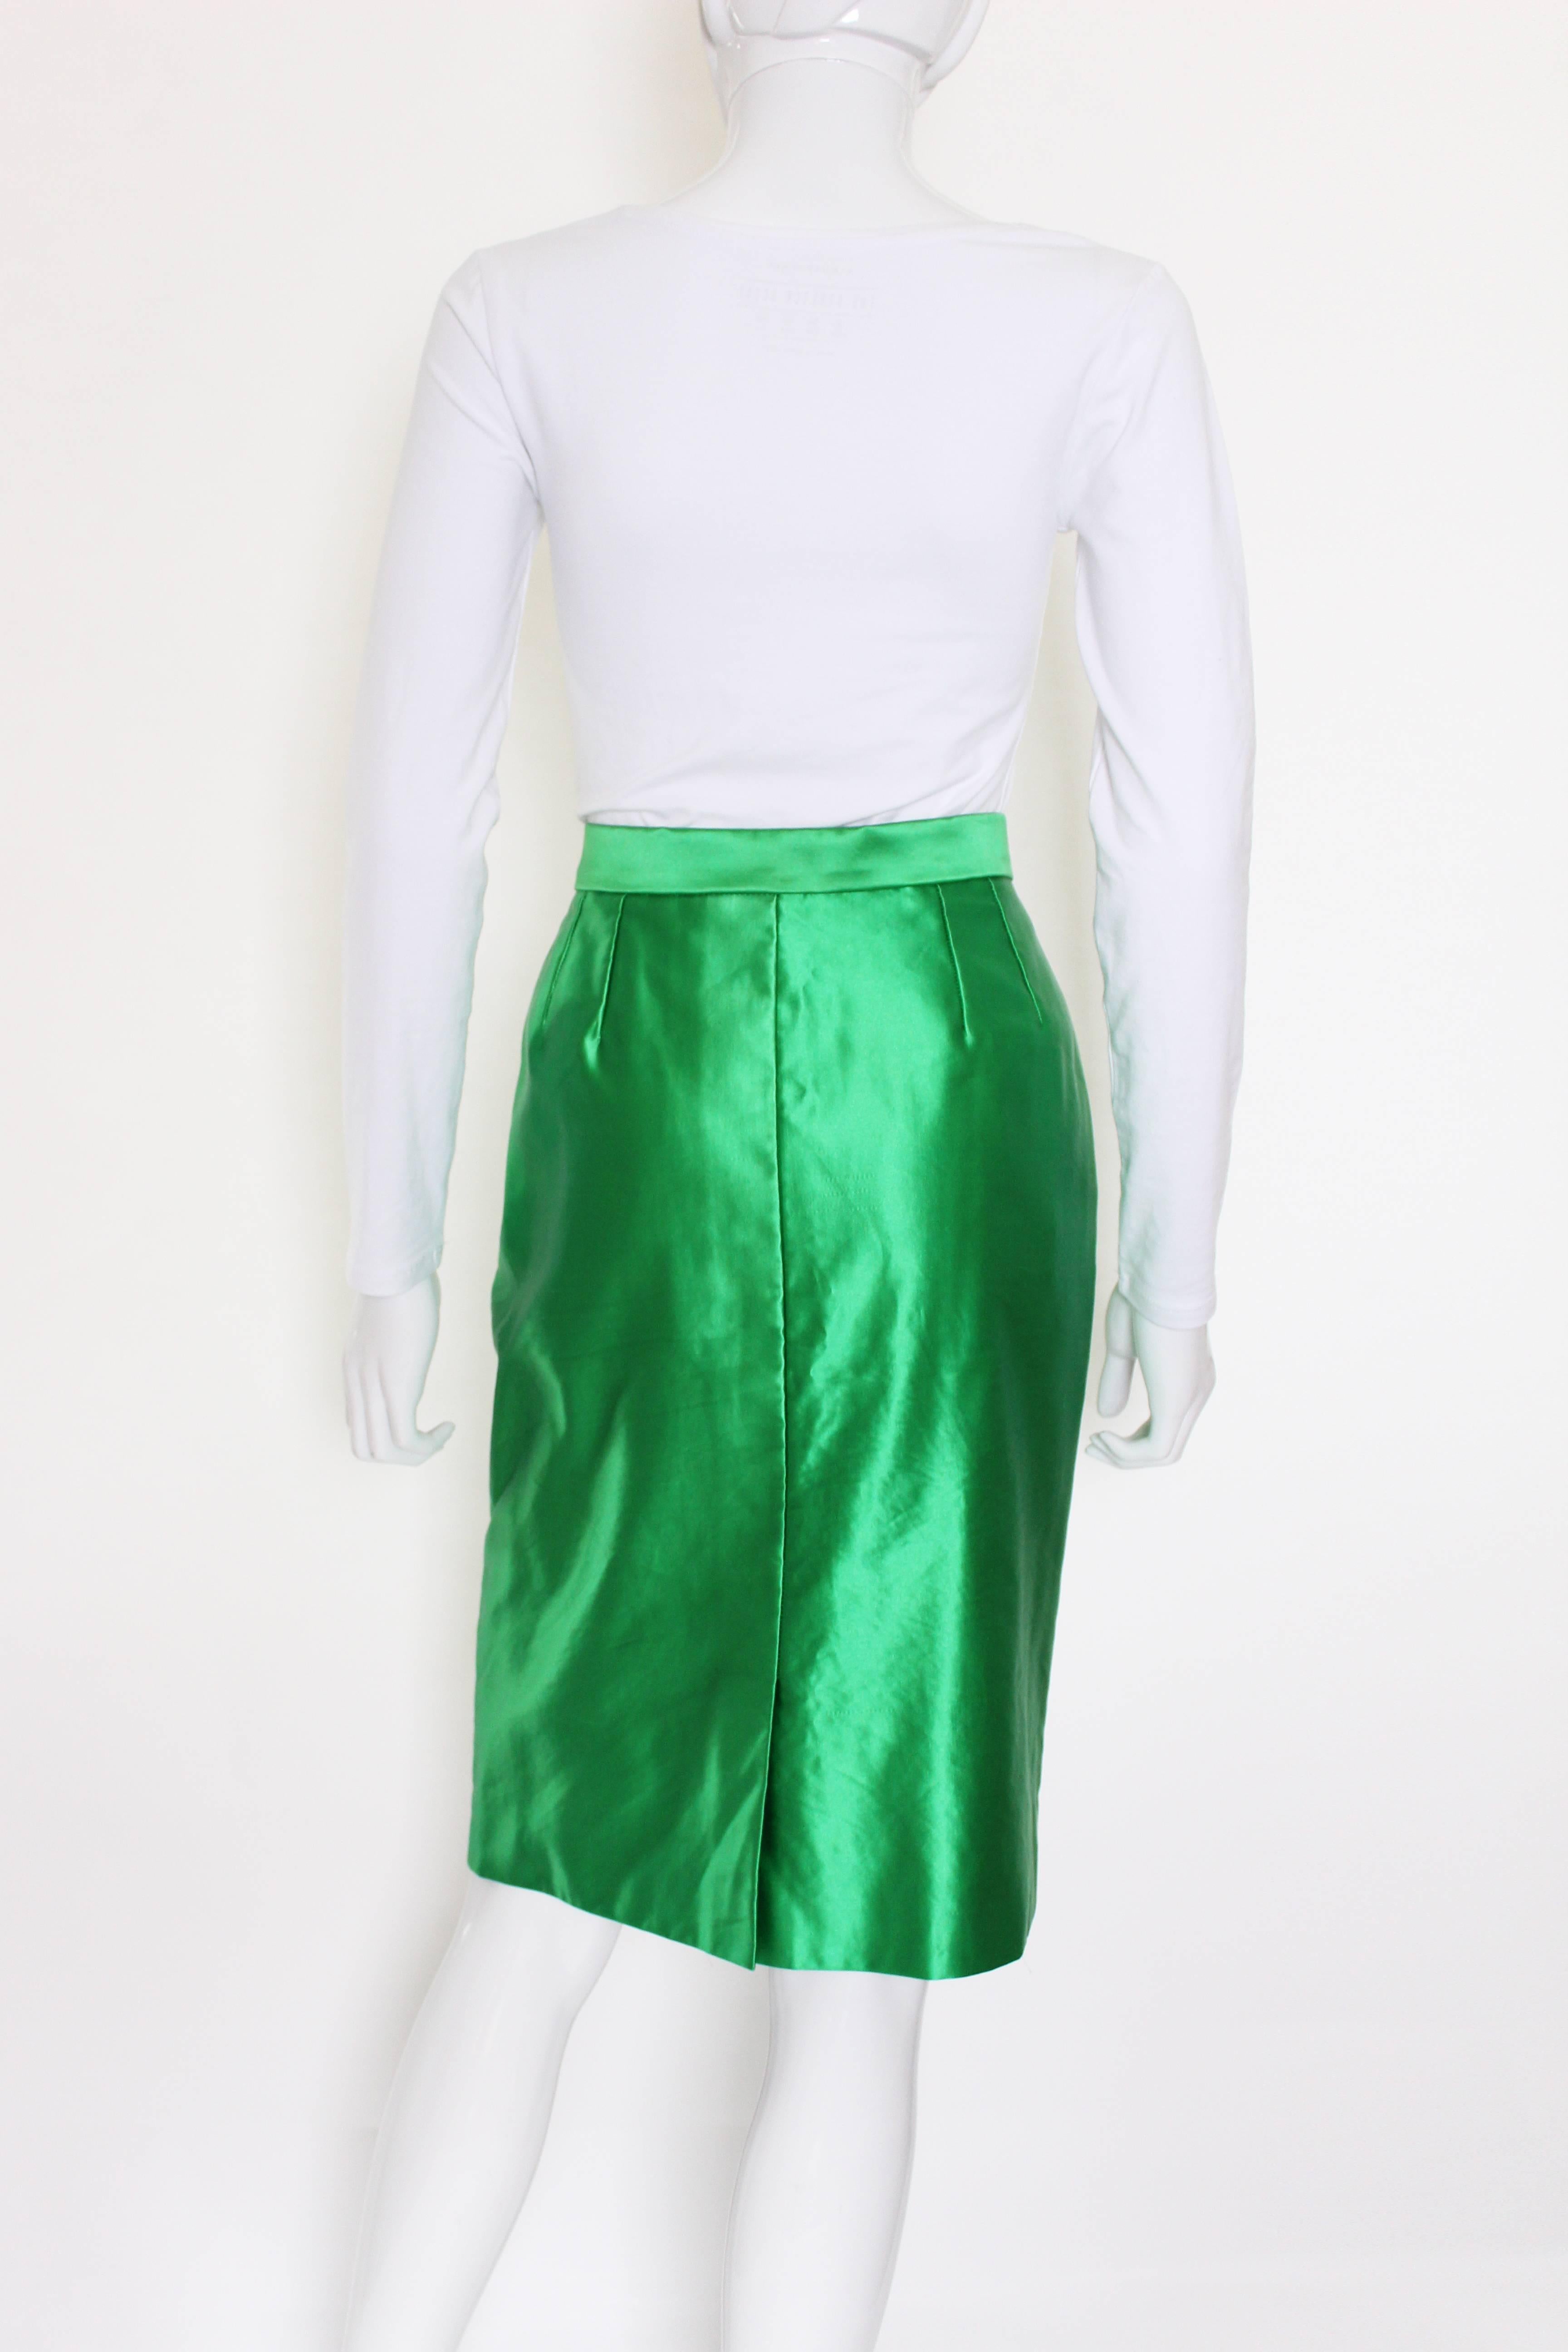 Green Yves Saint Laurent Variation Cotton and Silk mix Skirt